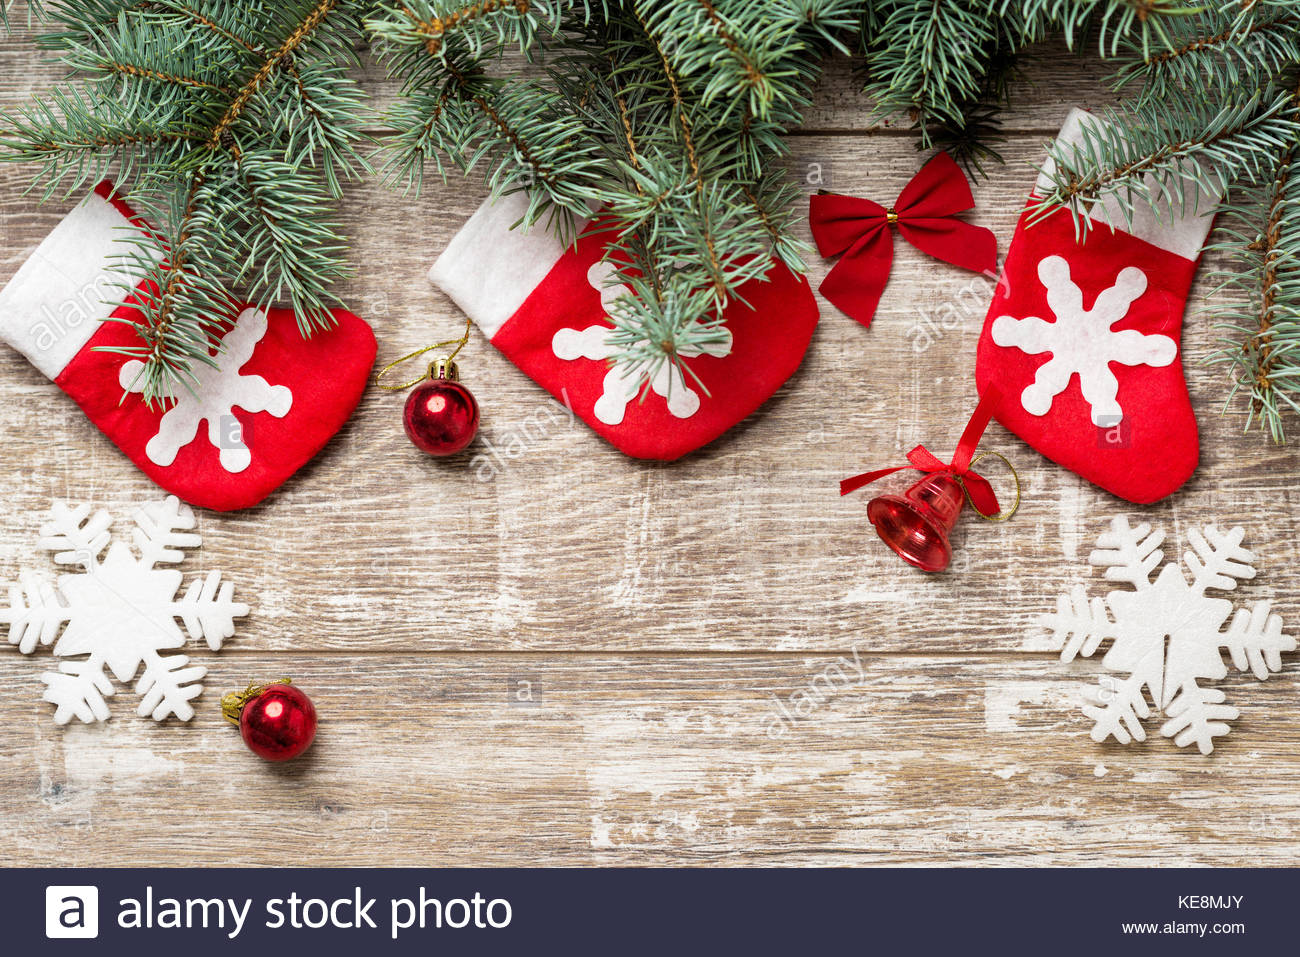 Christmas backgrounds 2018 Stock Photo 163690323   Alamy